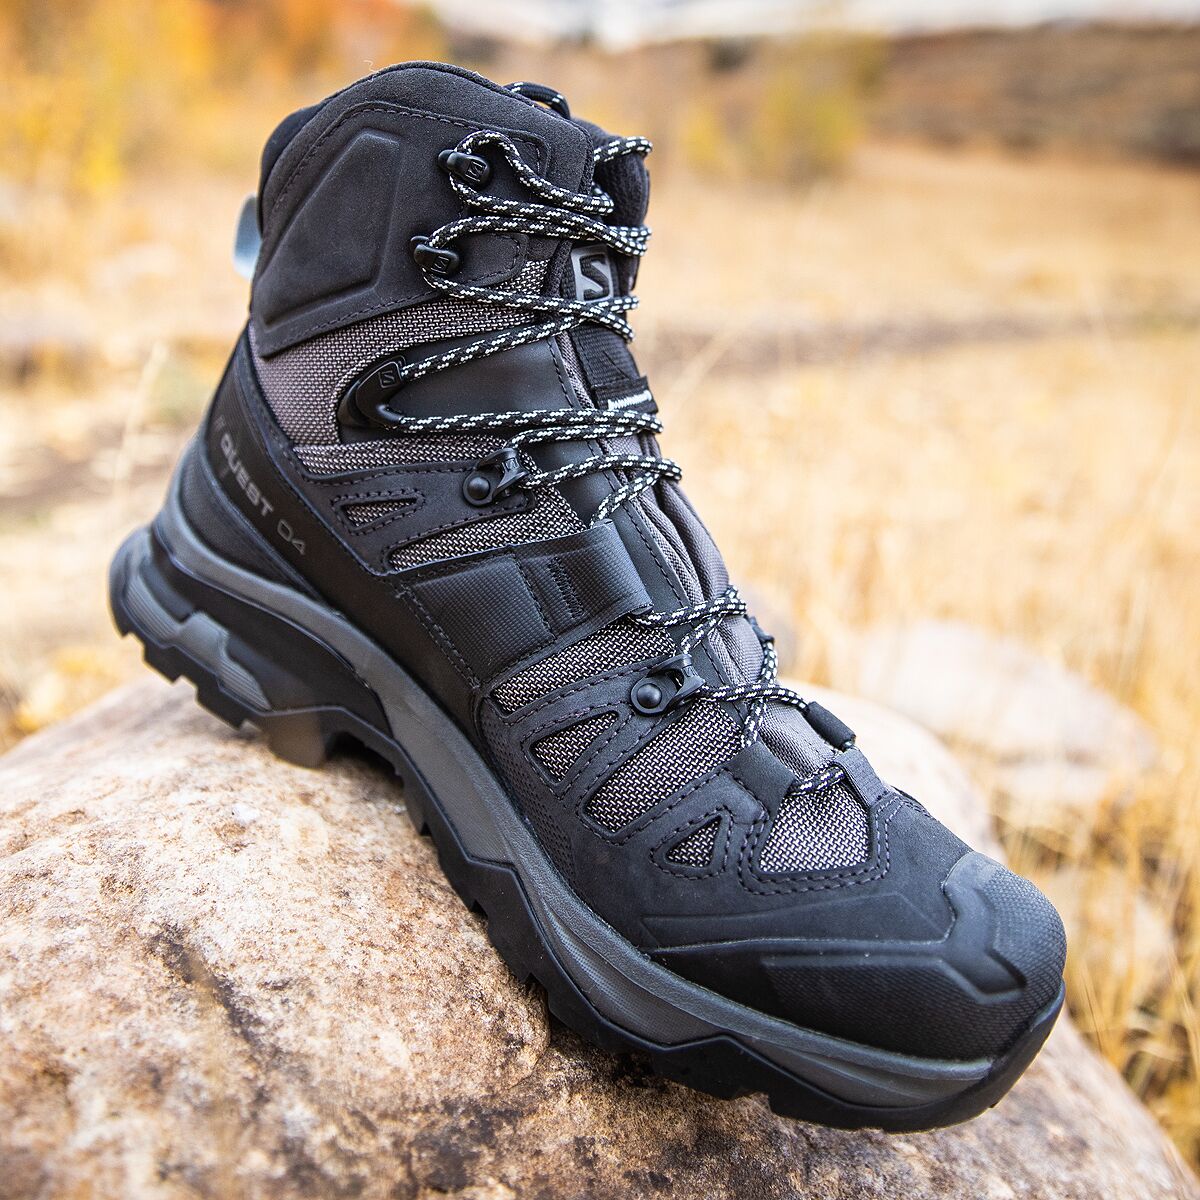 Salomon Quest 4 GTX Backpacking Boot - Men's - Footwear